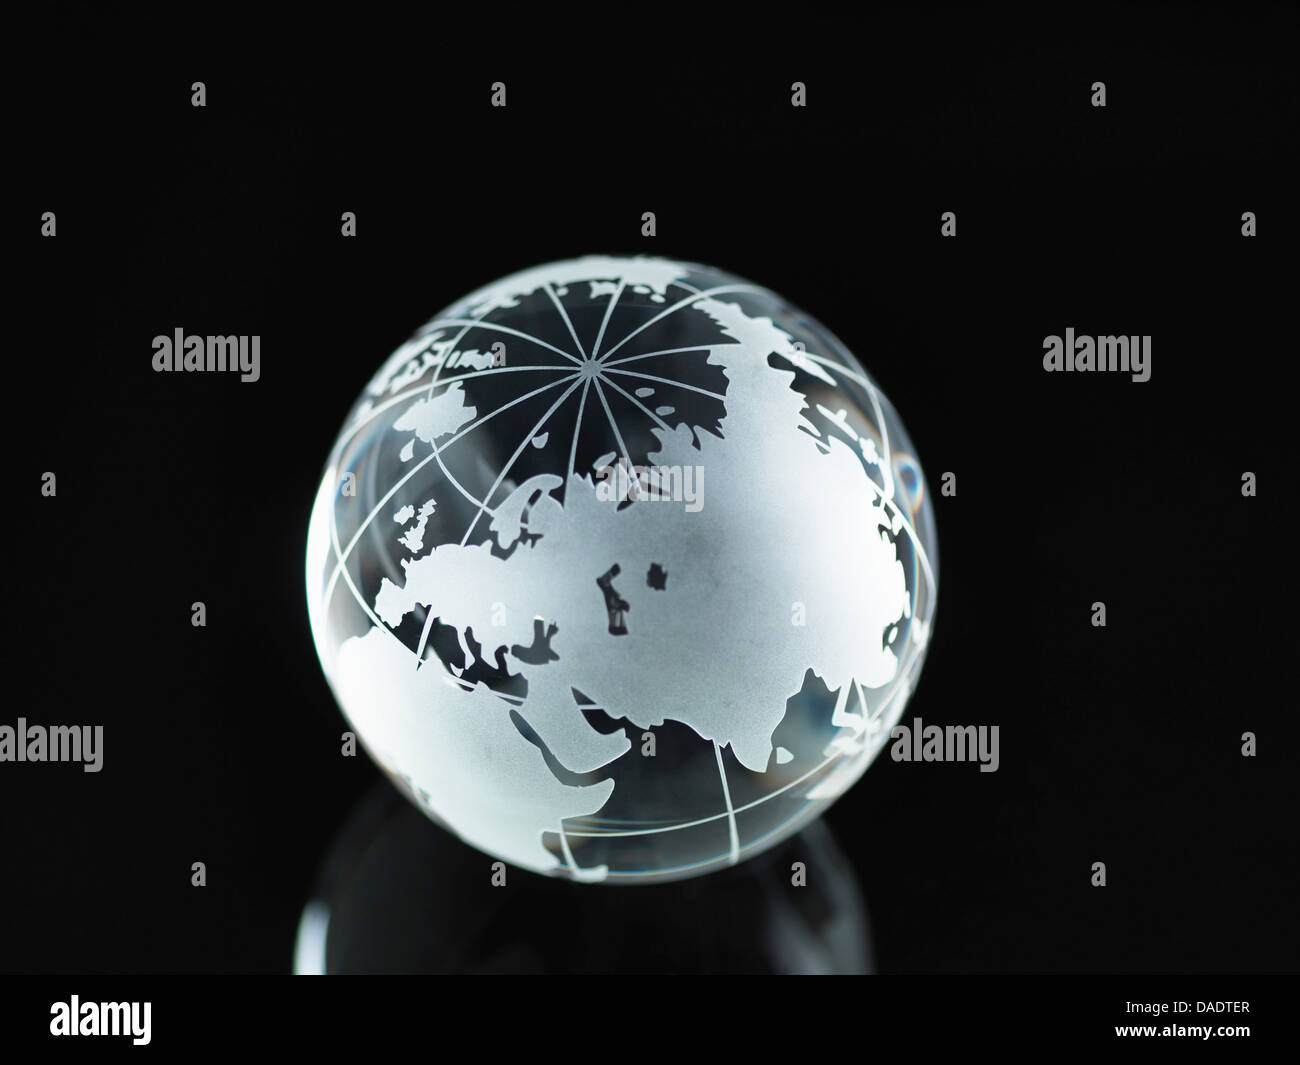 Glaskugel, die illustrieren, Asien, Indien, China, Russland, Afrika, Saudi Arabien, Naher Osten Stockfoto